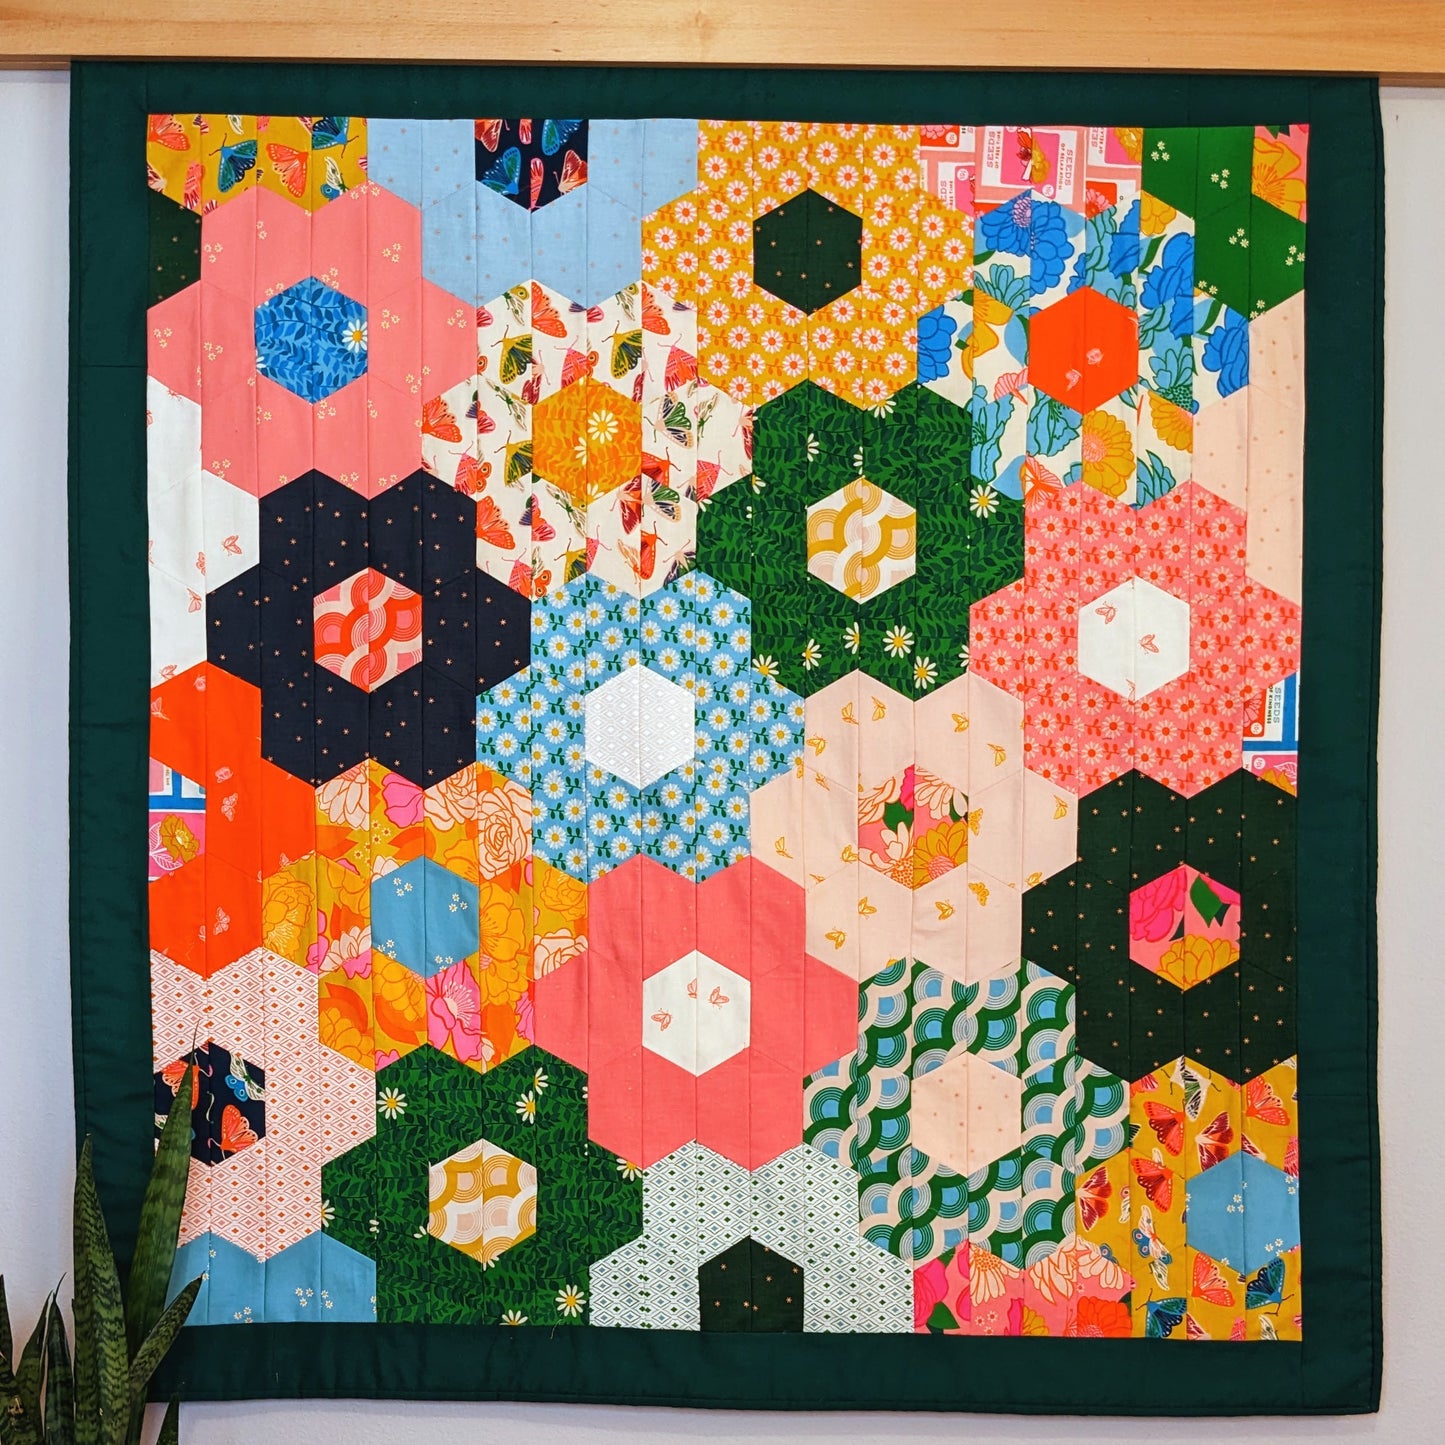 Hexagon Flower Quilt Pattern (Digital Download)